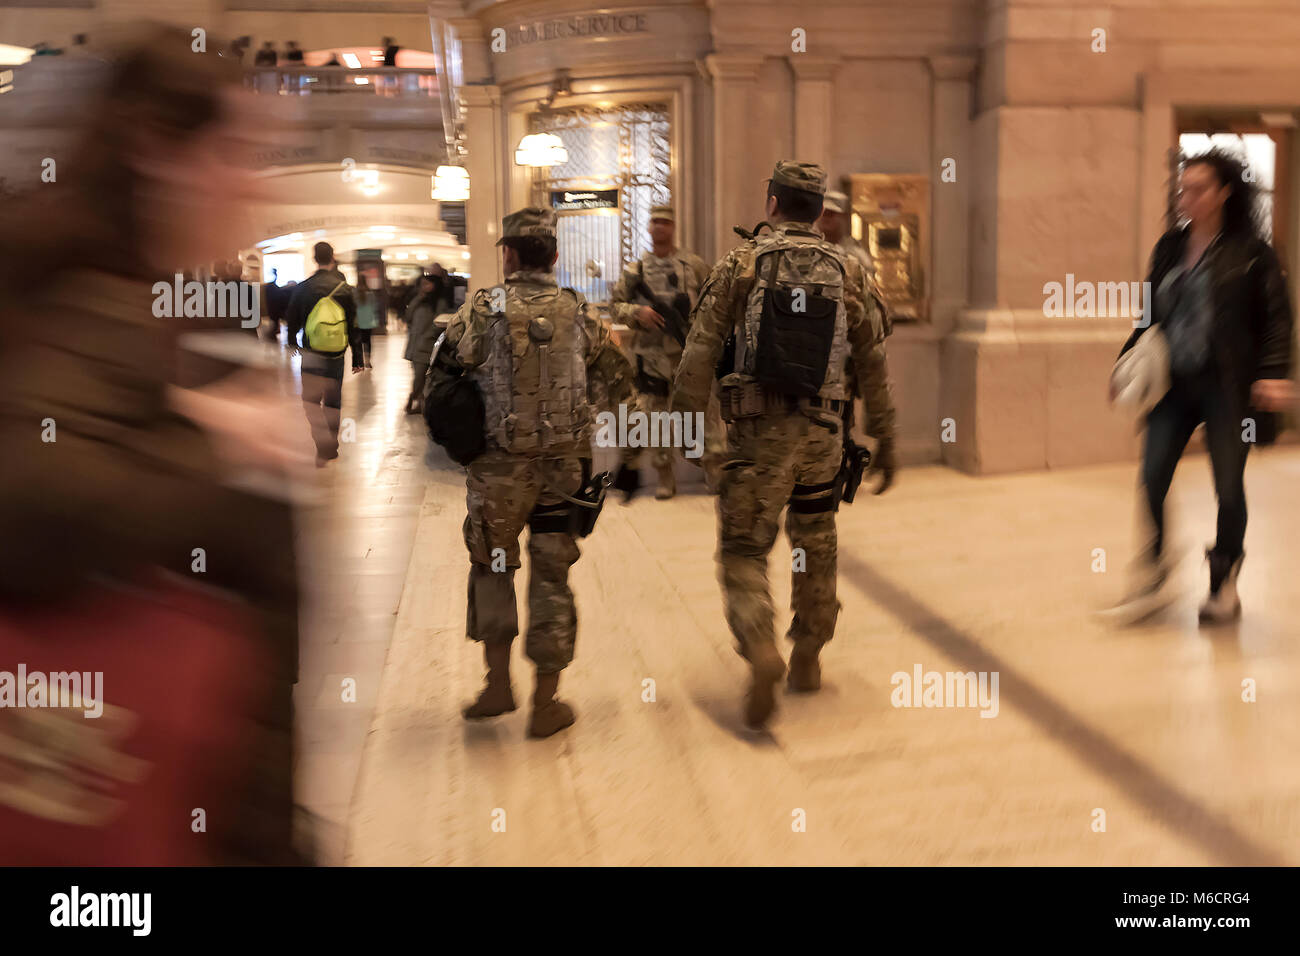 Oficiales de la Guardia Nacional del ejército patrullando la Grand Central Station, New York, NY, EUA. Foto de stock